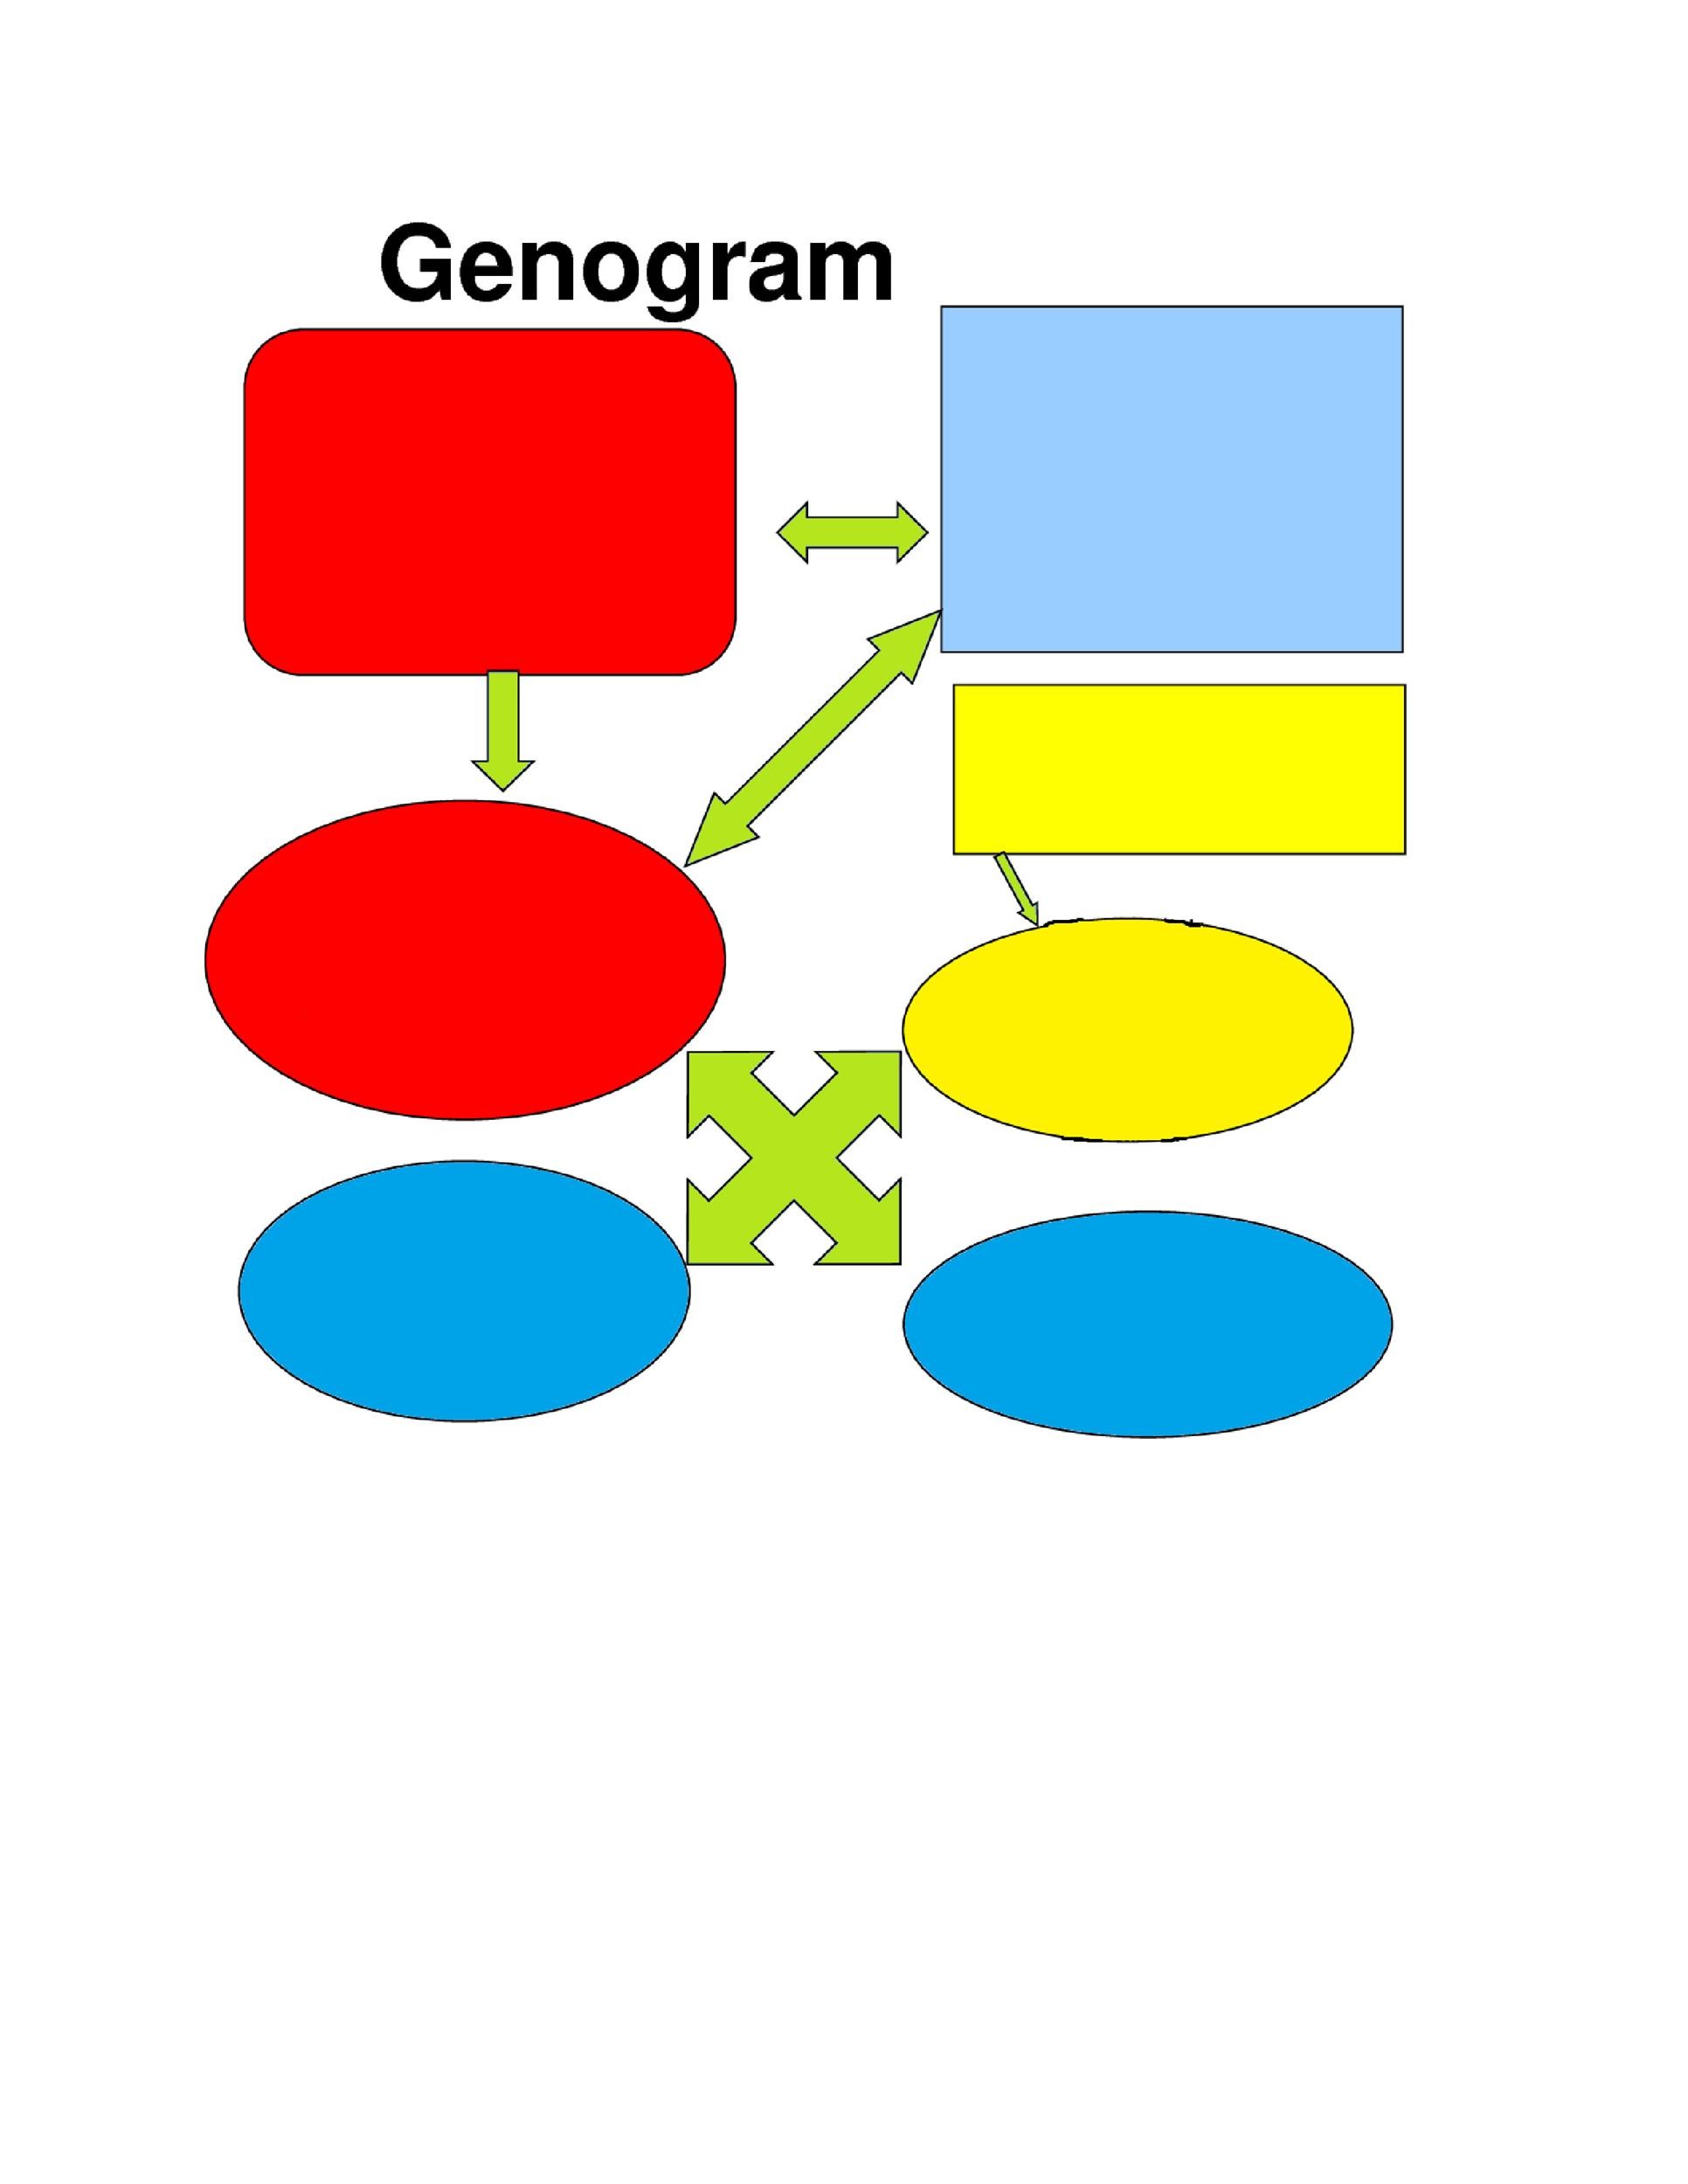 30 Free Genogram Templates & Symbols ᐅ TemplateLab